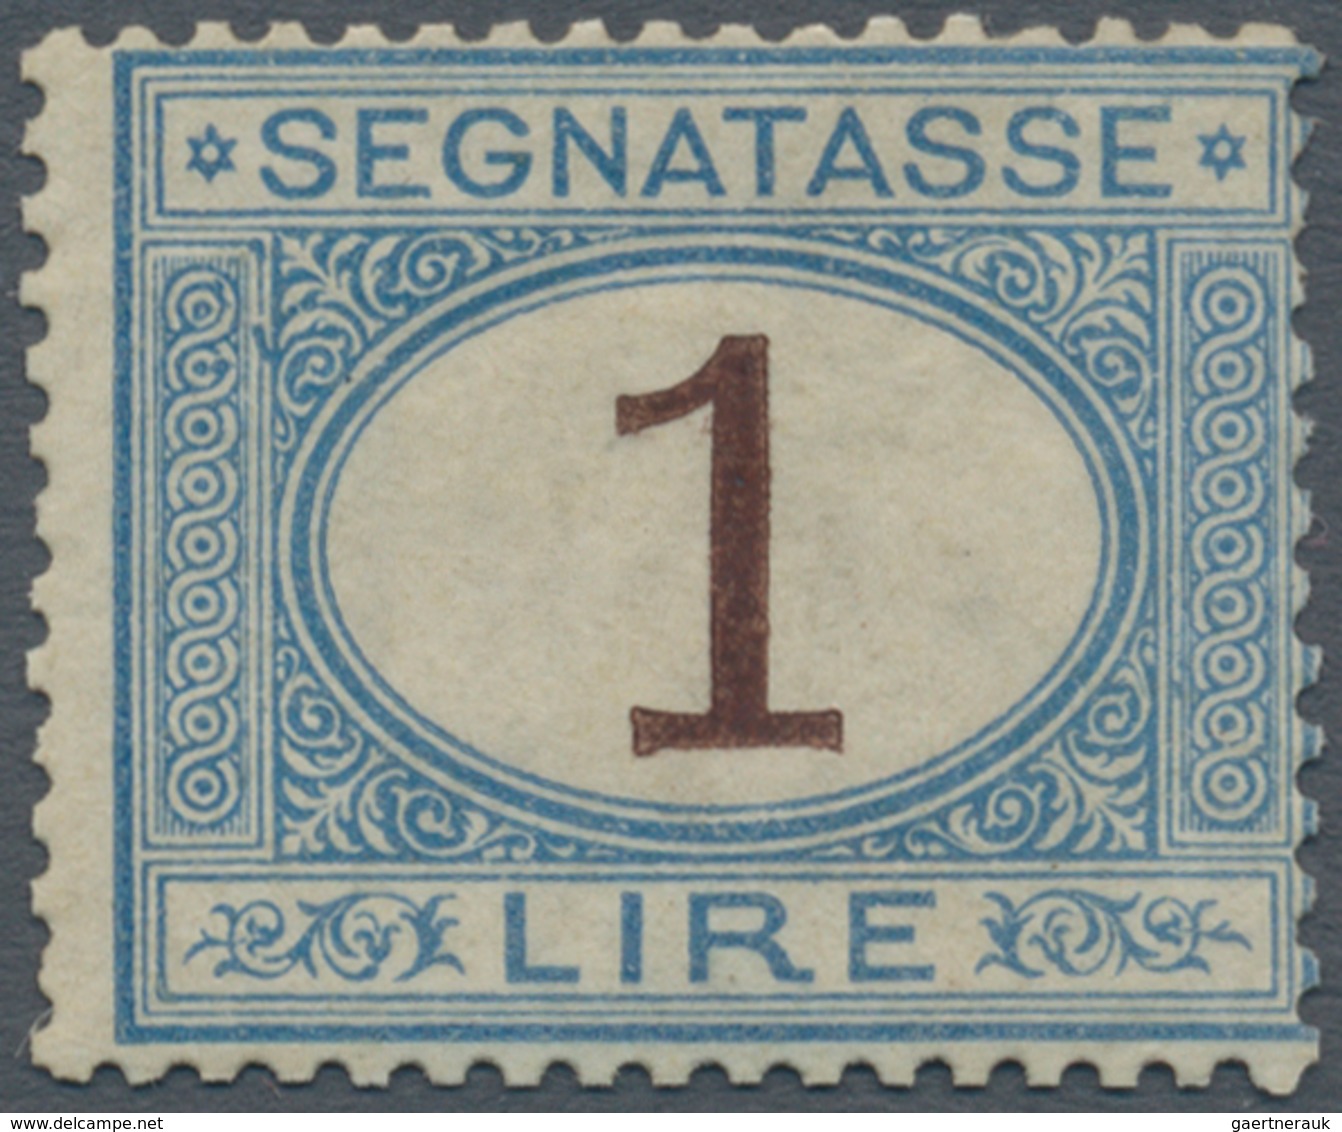 Italien - Portomarken: 1870: Postage Due, 1 Lira Light Blue And Brown, Mint With Original Gum; Certi - Postage Due